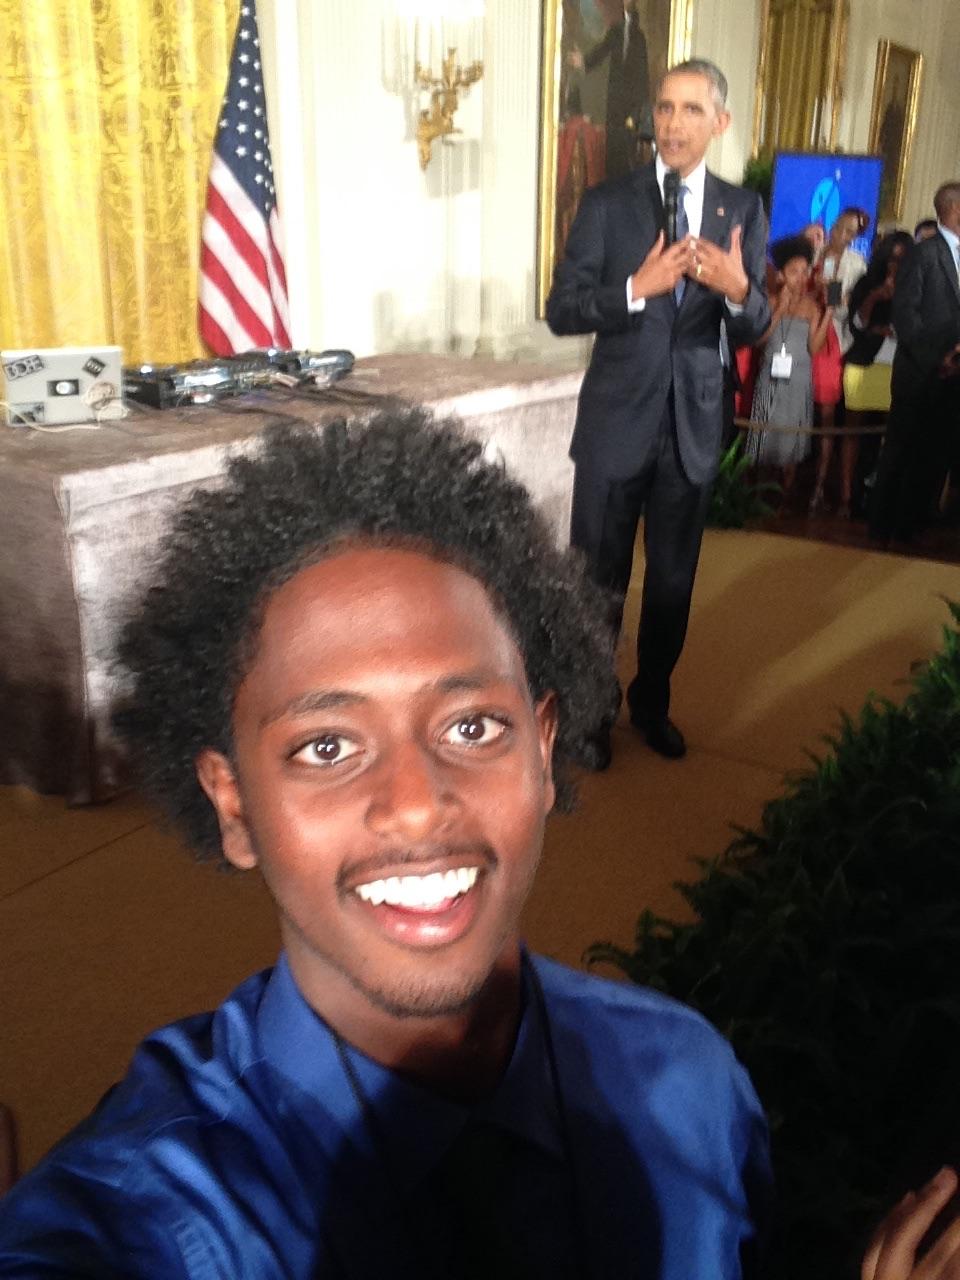 Dawit_and_Obama